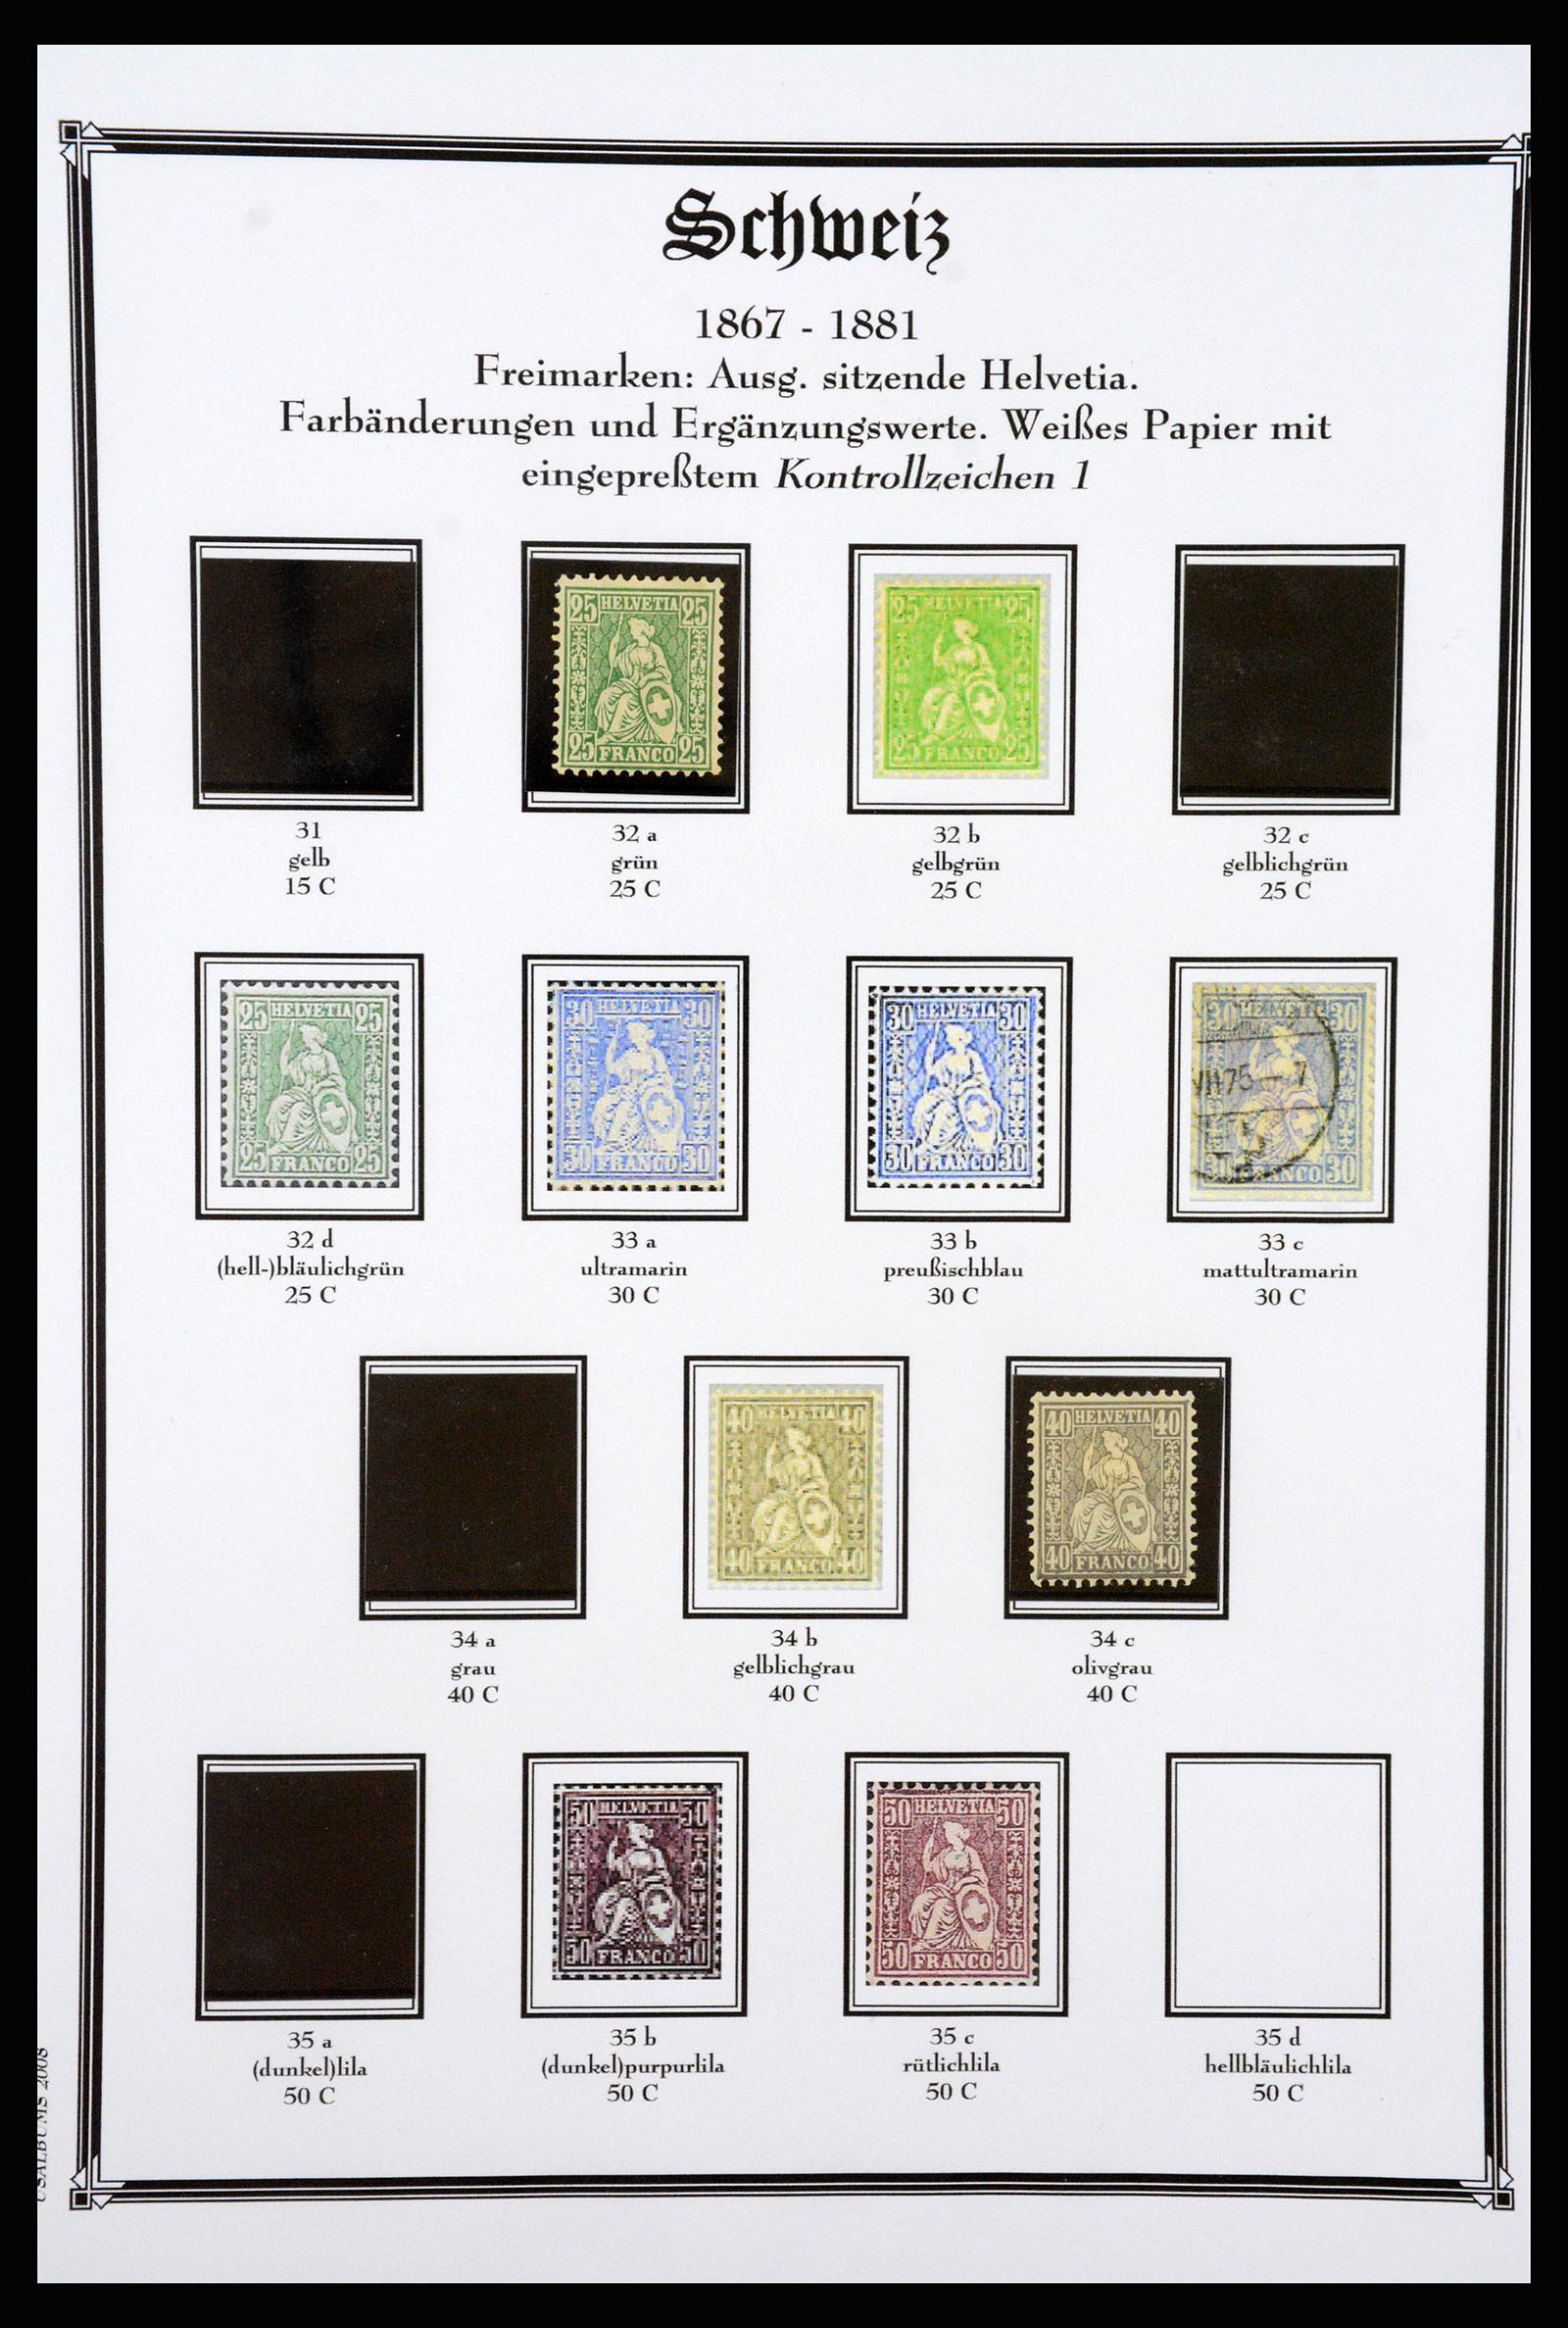 37159 002 - Stamp collection 37159 Switzerland 1862-2000.